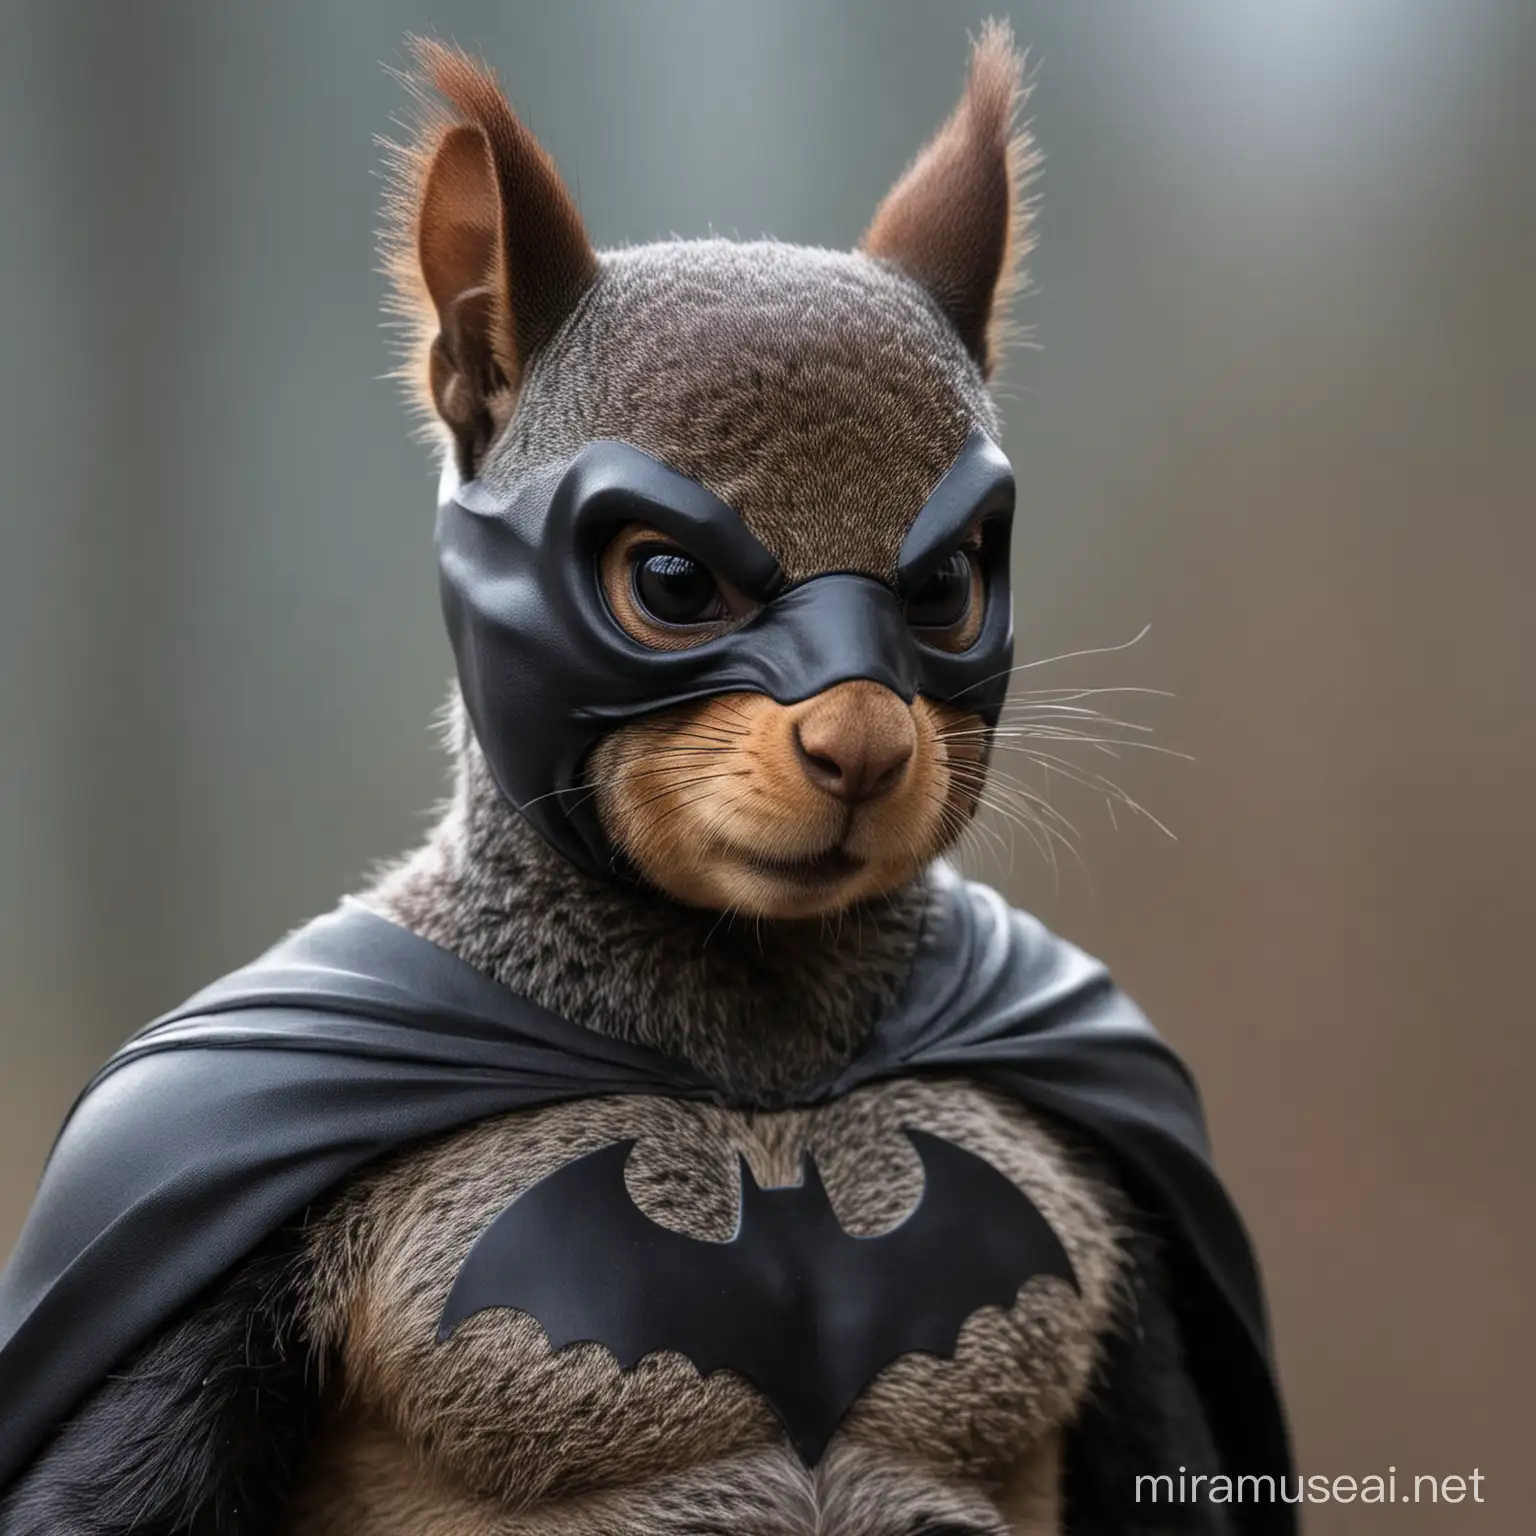 Adorable Squirrel Wearing Batman Mask